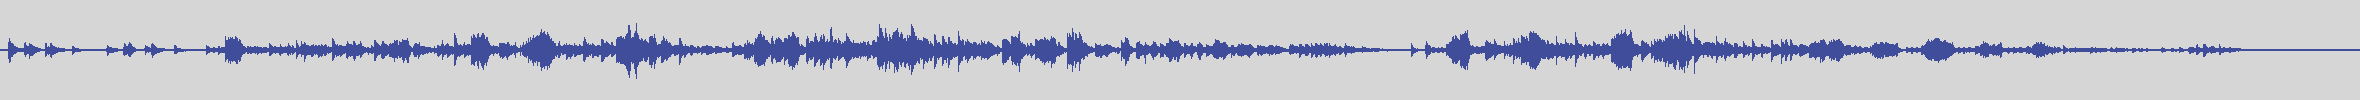 big_music_classic [BMC008] Frédéric Chopin -  [Original Version] audio wave form